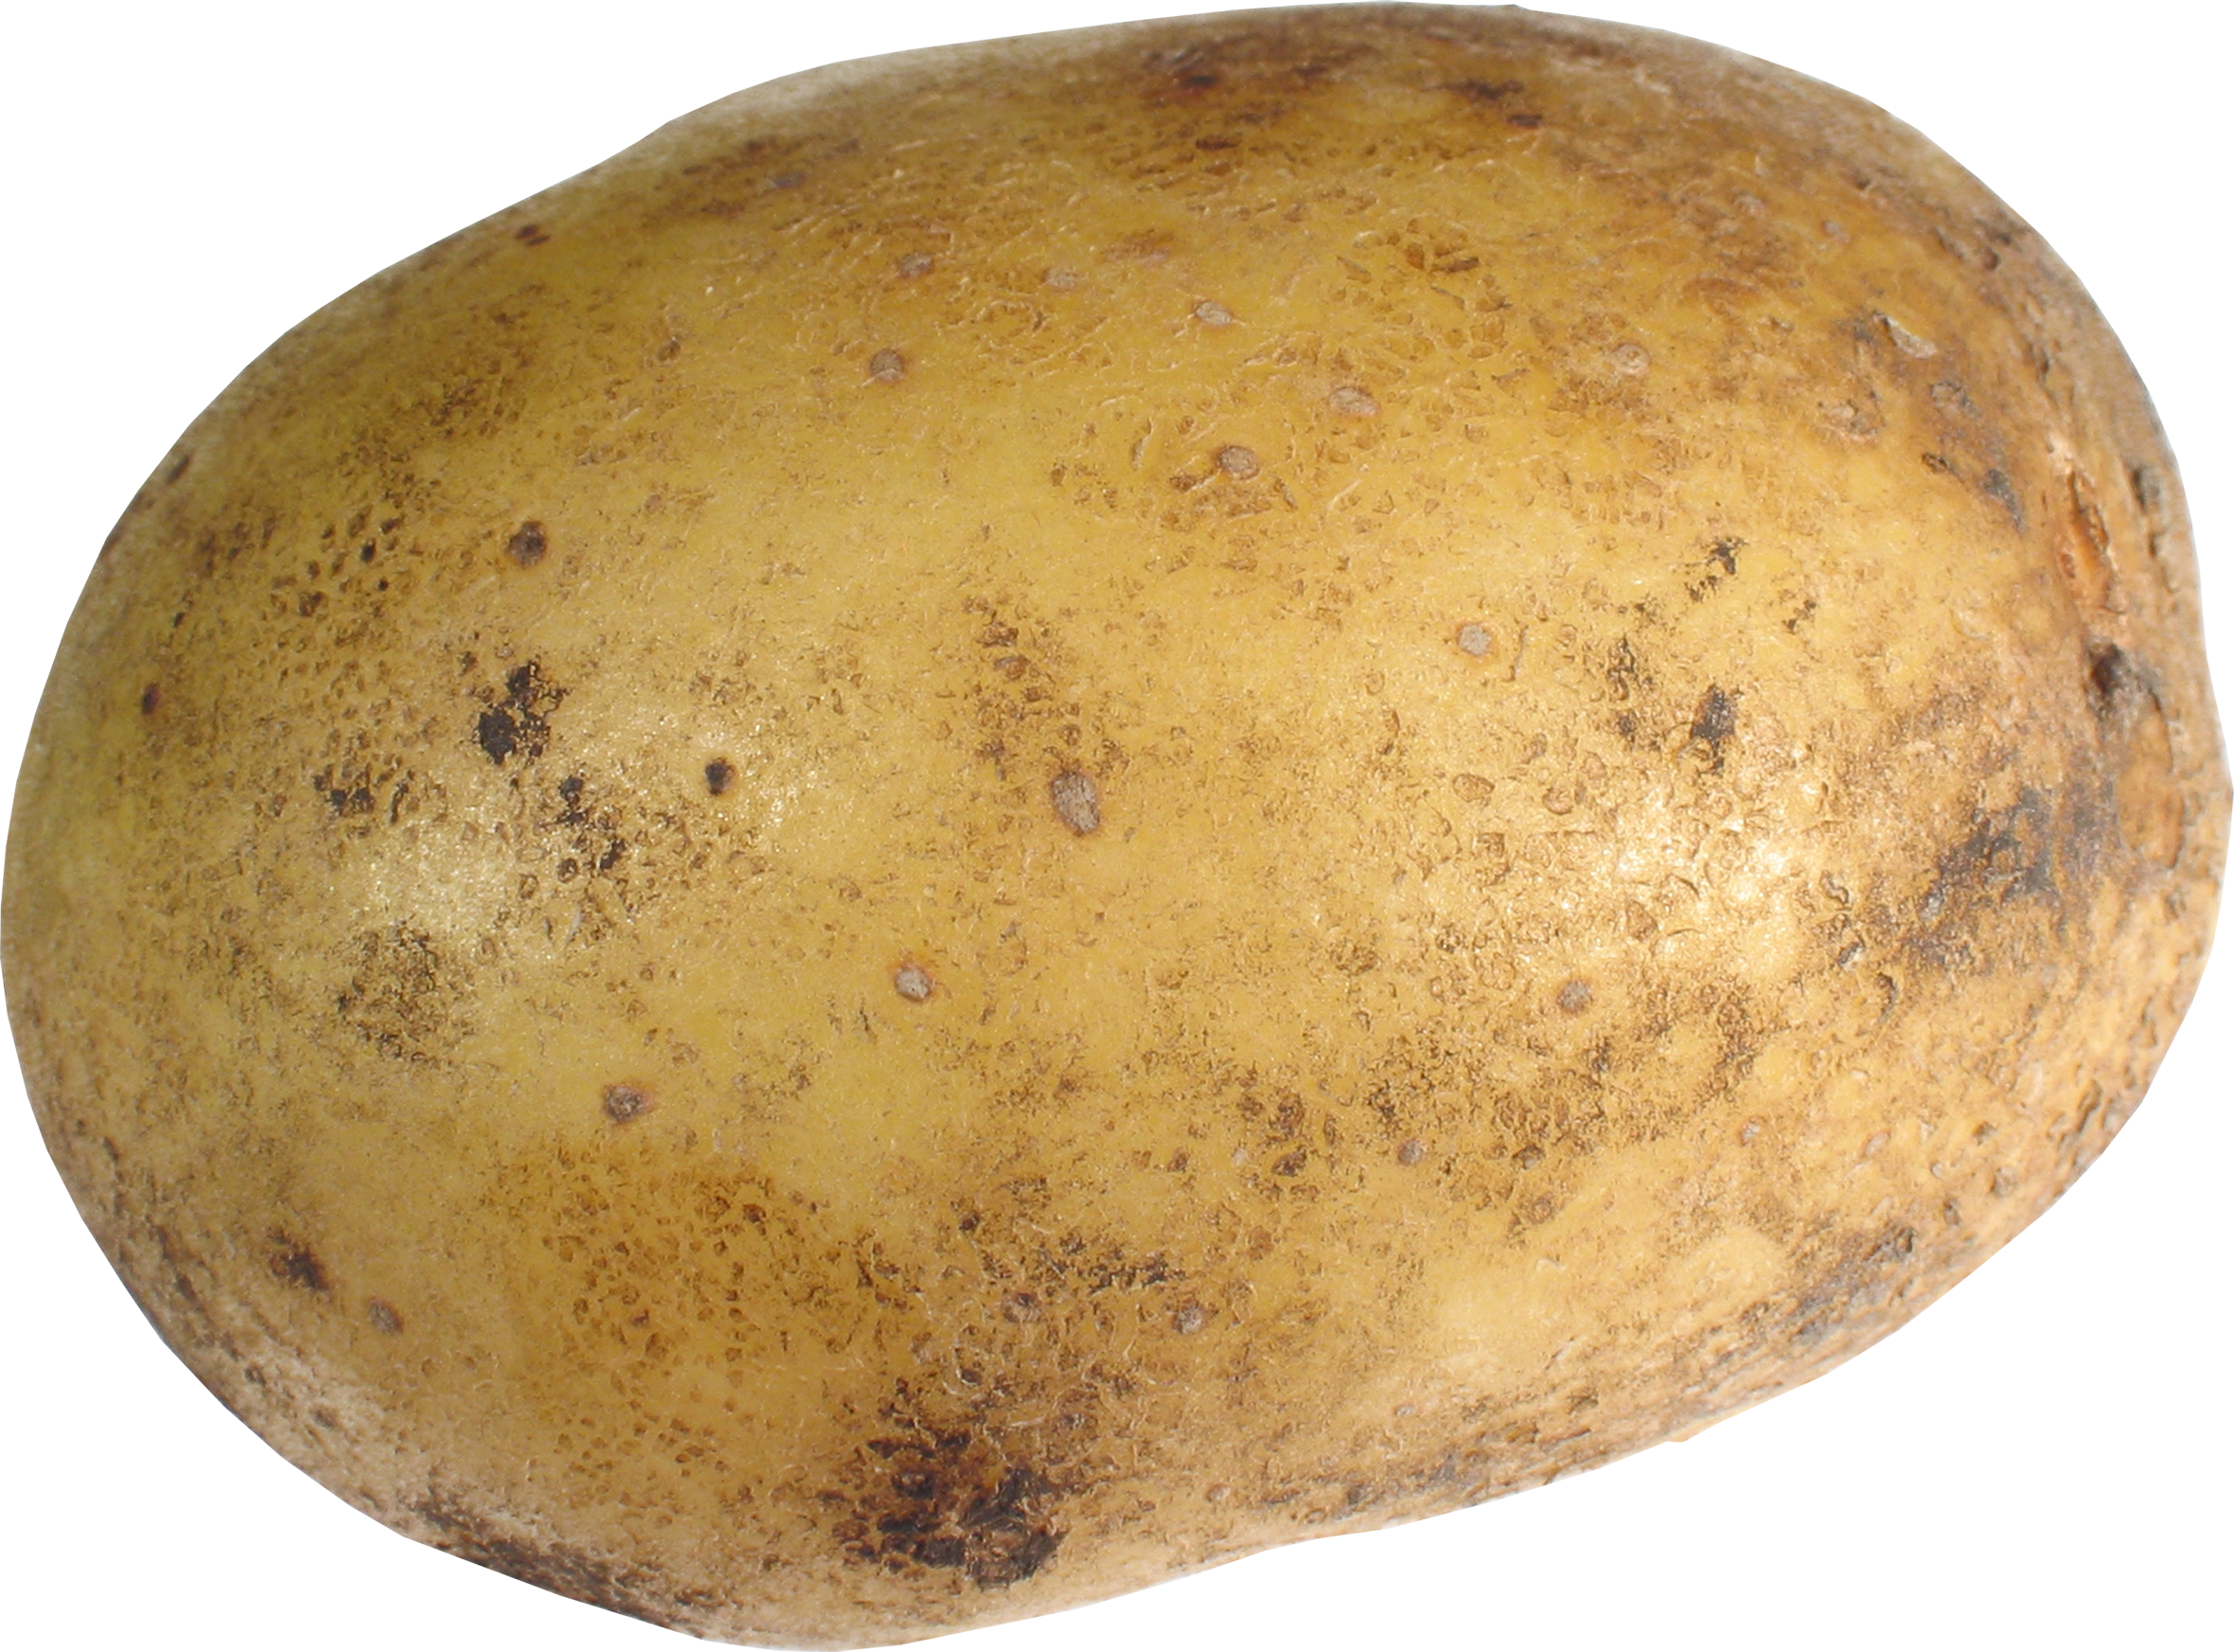 Картошка PNG